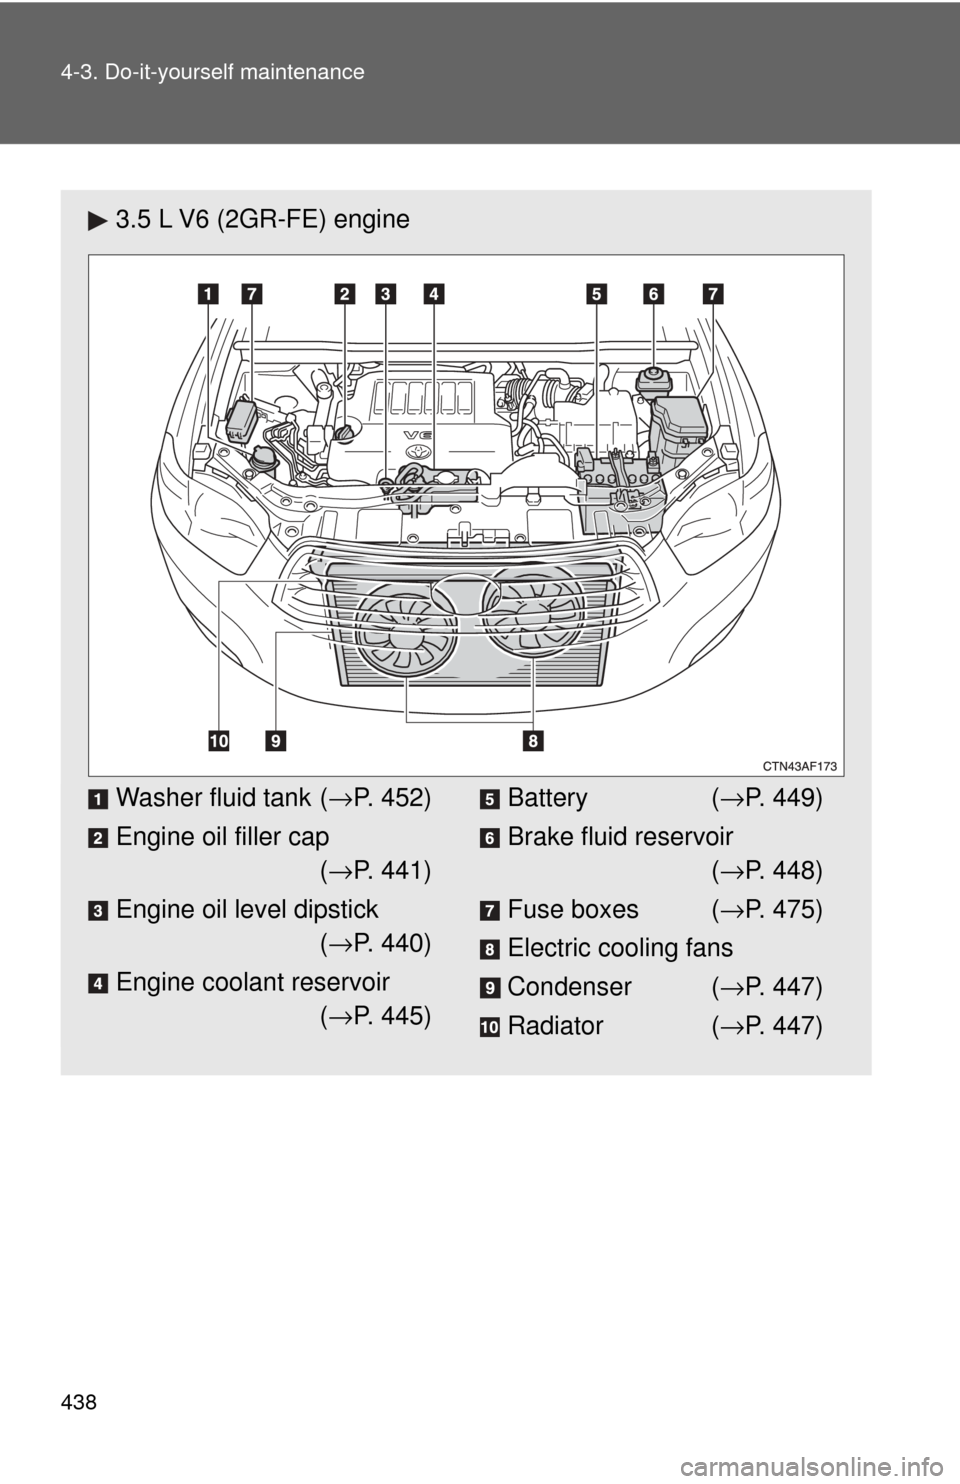 TOYOTA HIGHLANDER 2009 XU40 / 2.G Owners Manual 438 4-3. Do-it-yourself maintenance
3.5 L V6 (2GR-FE) engine
Washer fluid tank (→P. 452)
Engine oil filler cap (→ P. 441)
Engine oil level dipstick (→ P. 440)
Engine coolant reservoir (→ P. 44